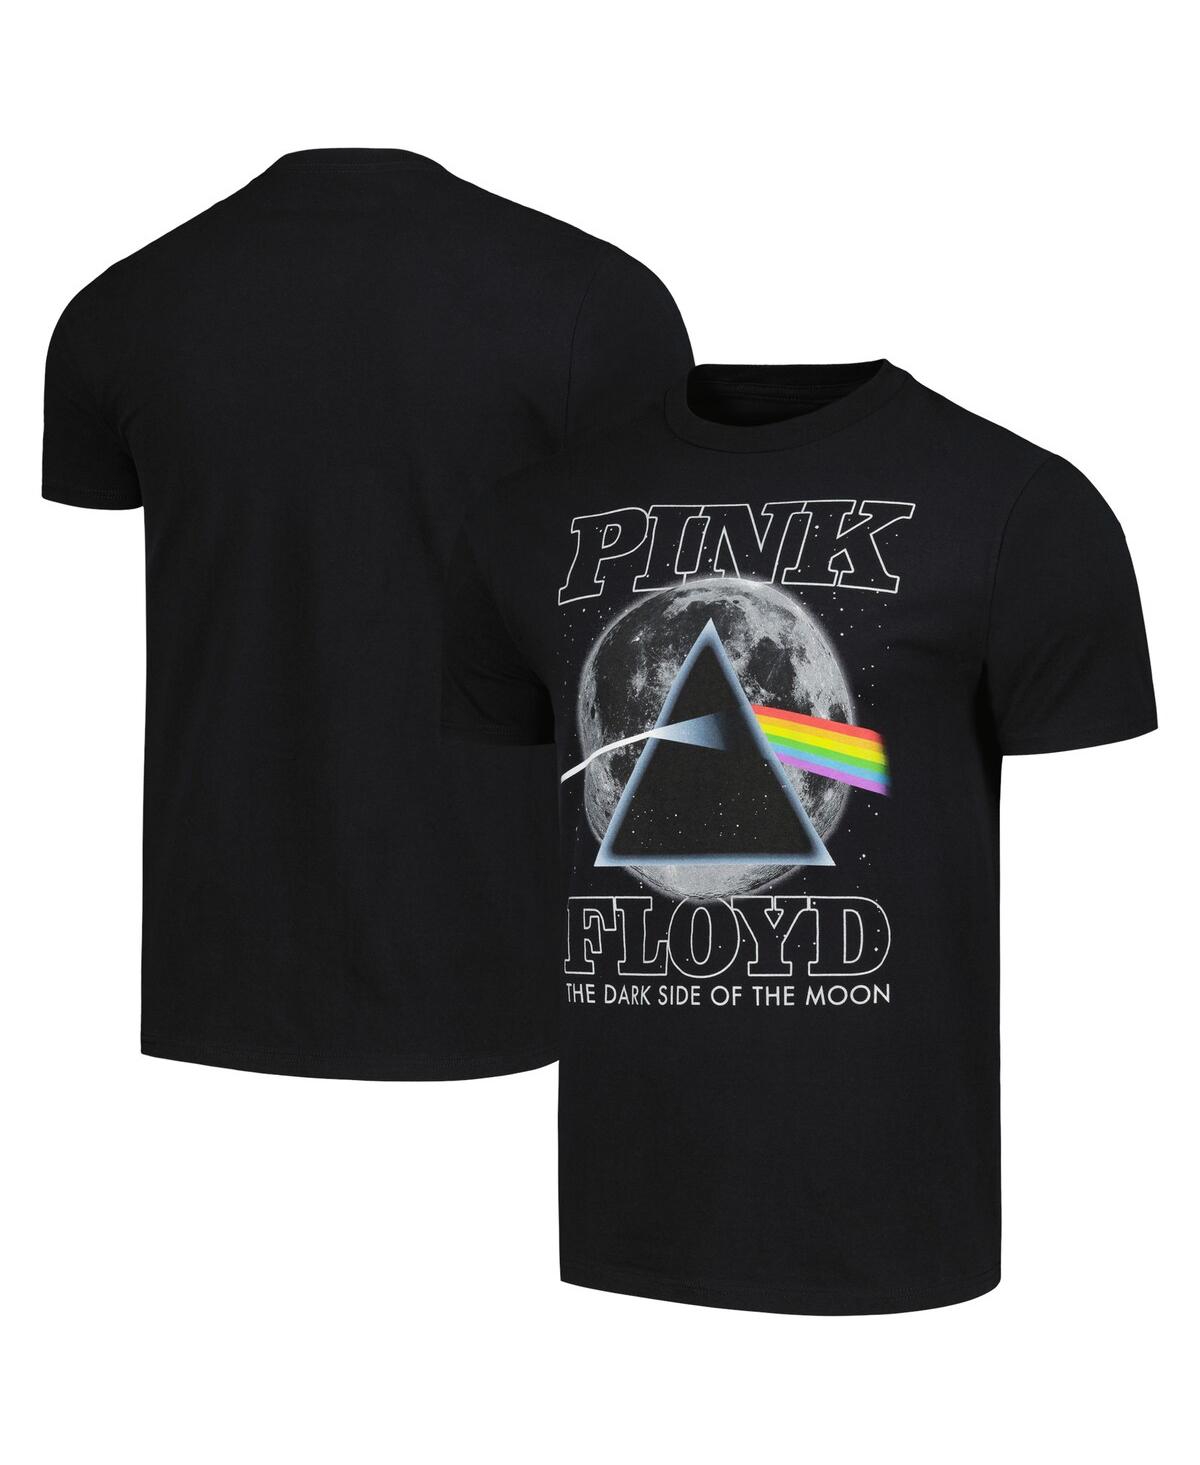 Men's Black Pink Floyd Graphic T-shirt - Black